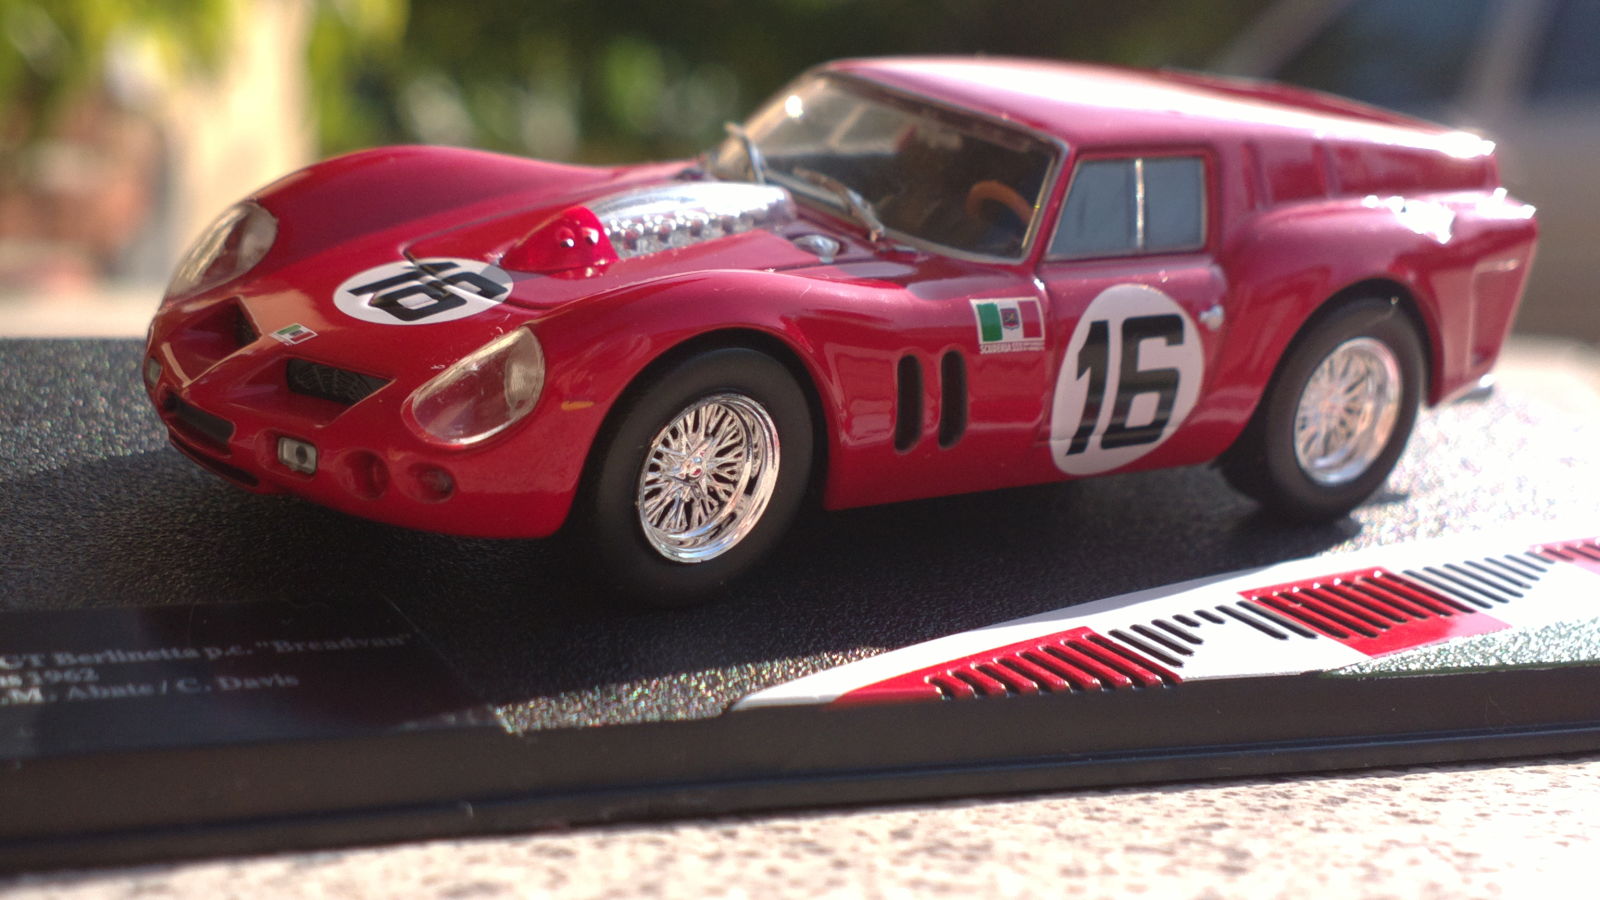 Illustration for article titled Concours dModella - 1962 Ferrari Breadvan